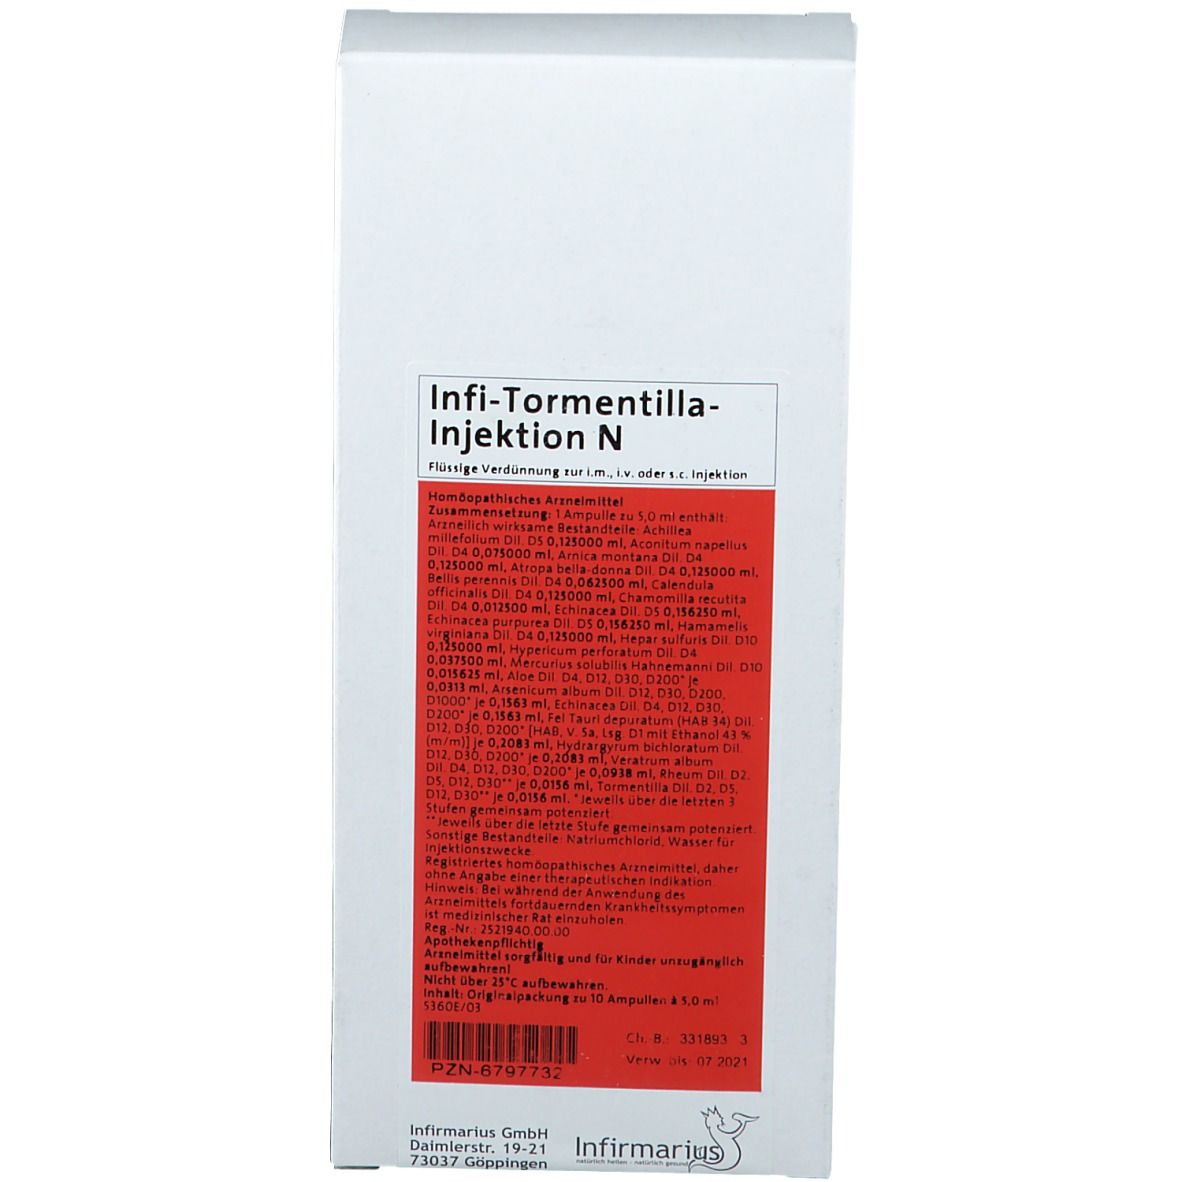 Infi-Tormentilla-Injektion N